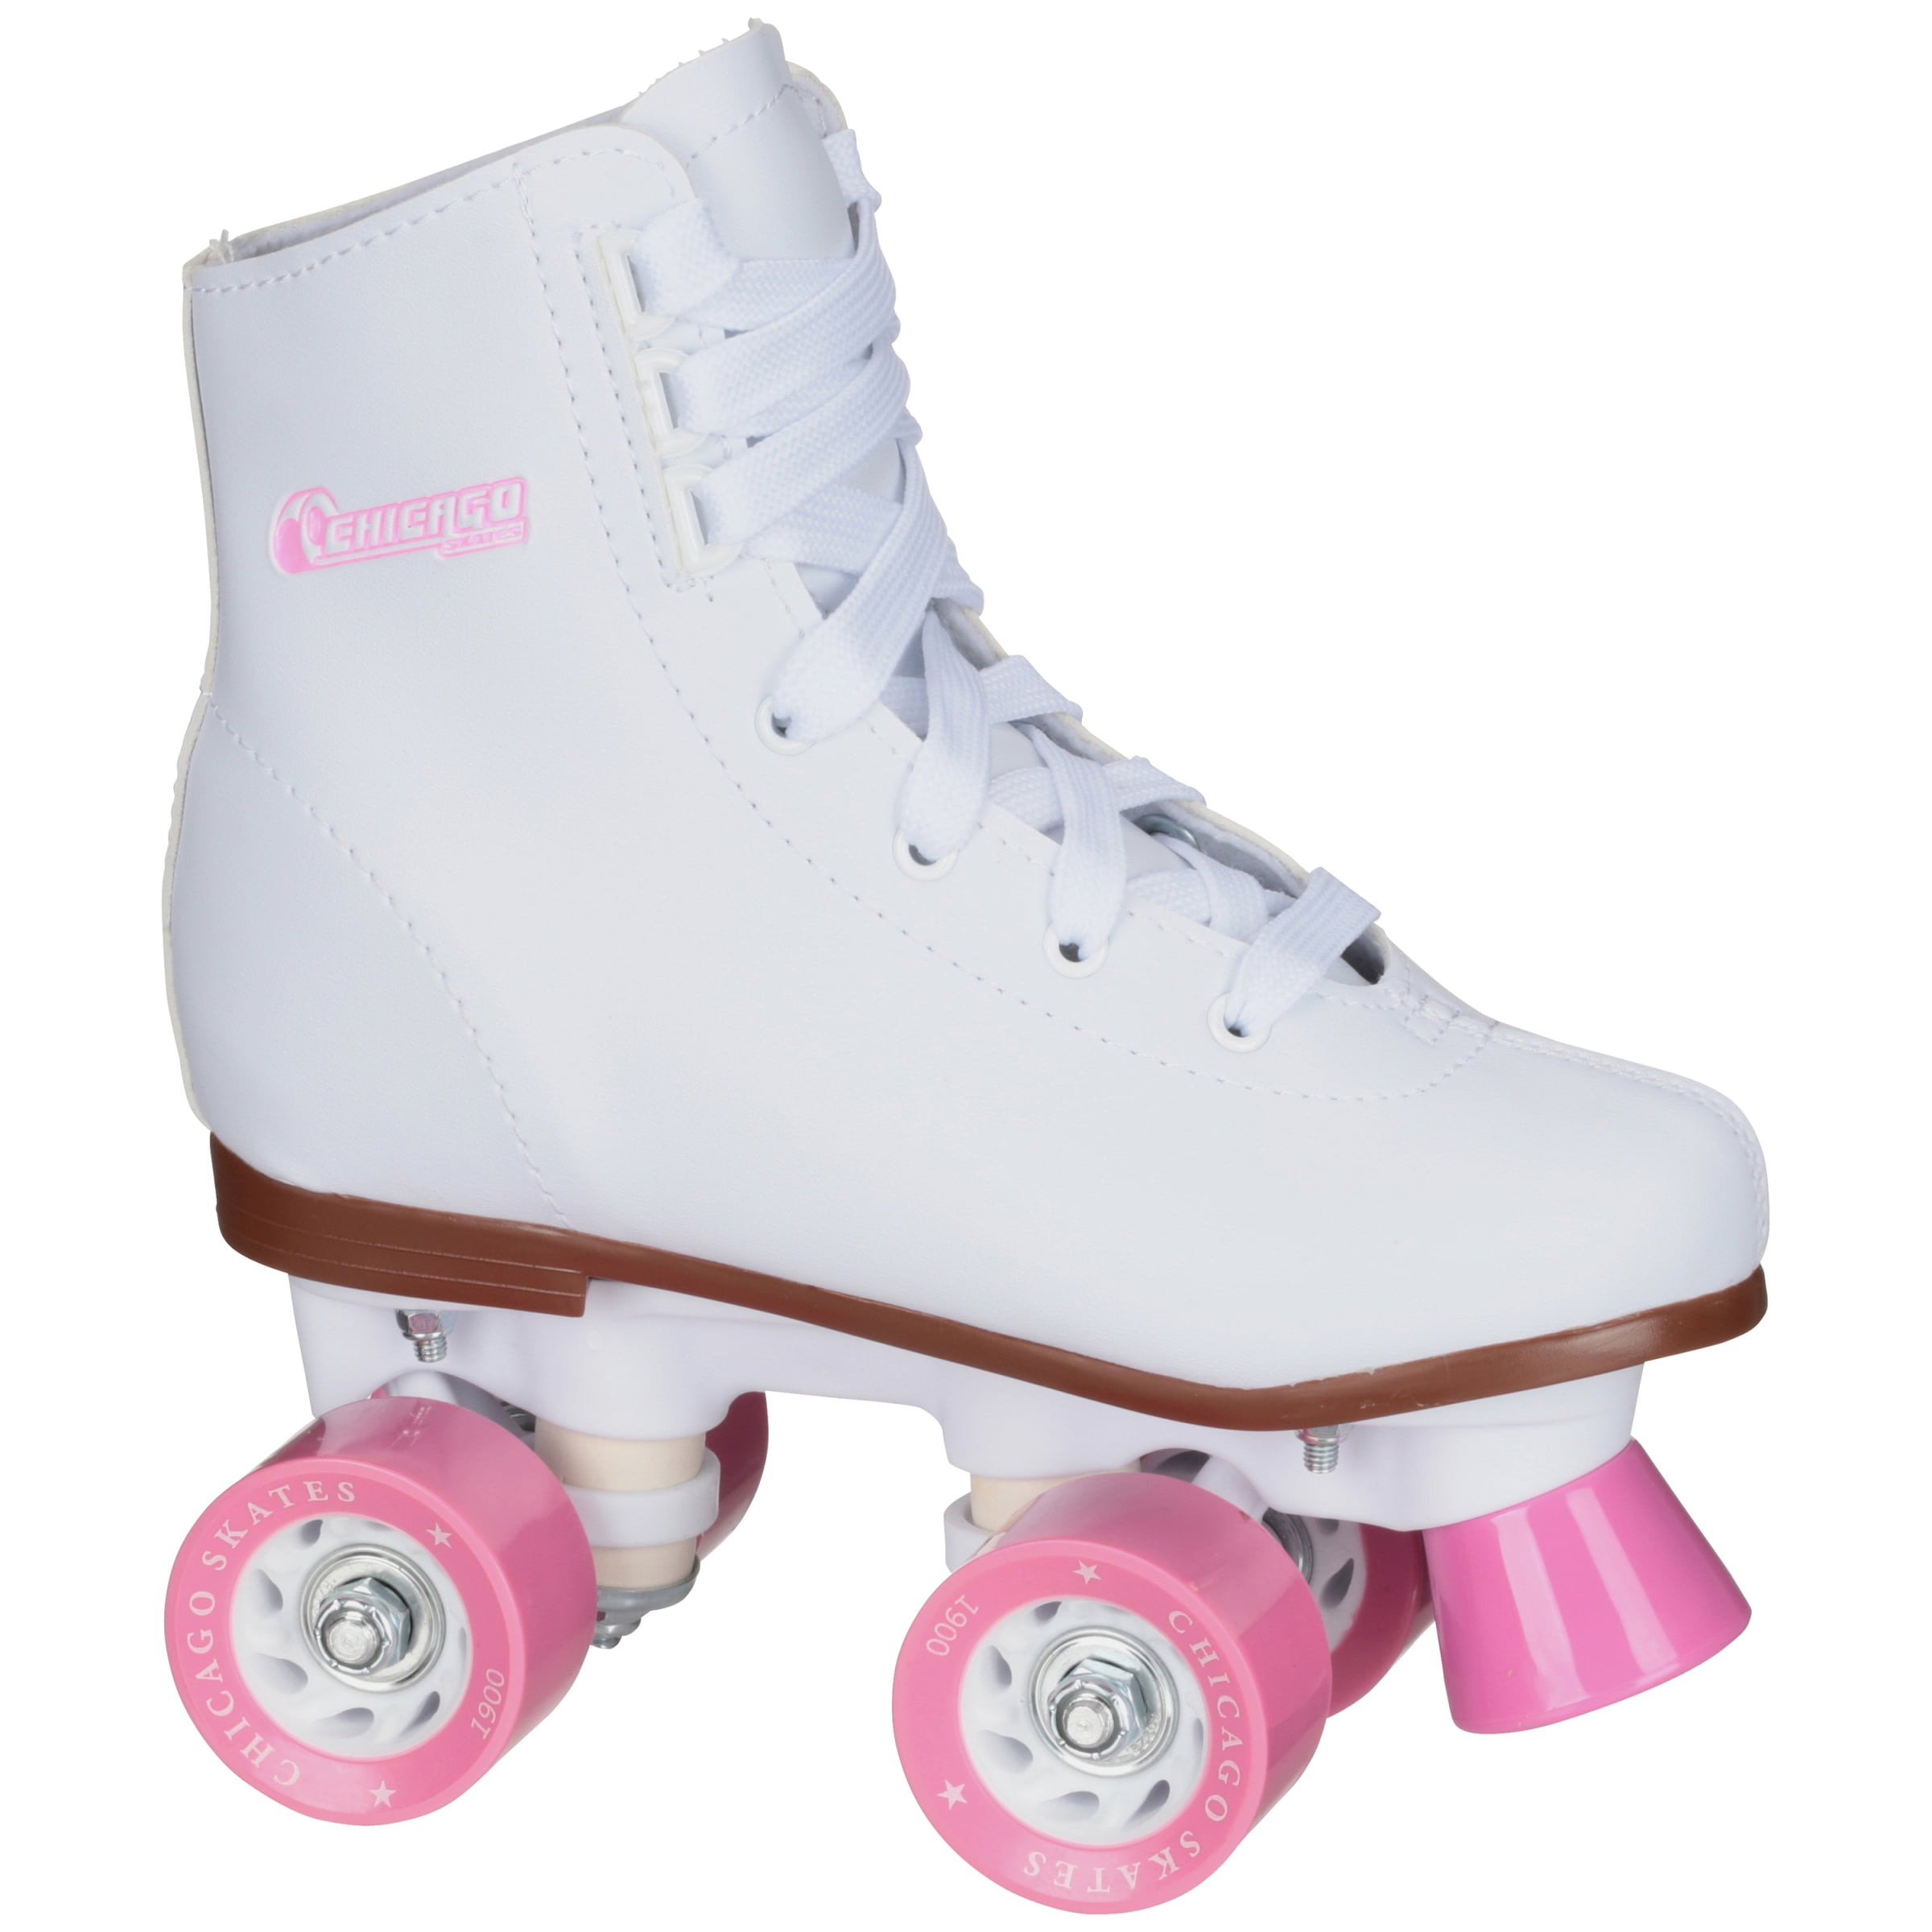 Premium White Quad Rink Skates Size 6 US Chicago Women's Classic Roller Skates 